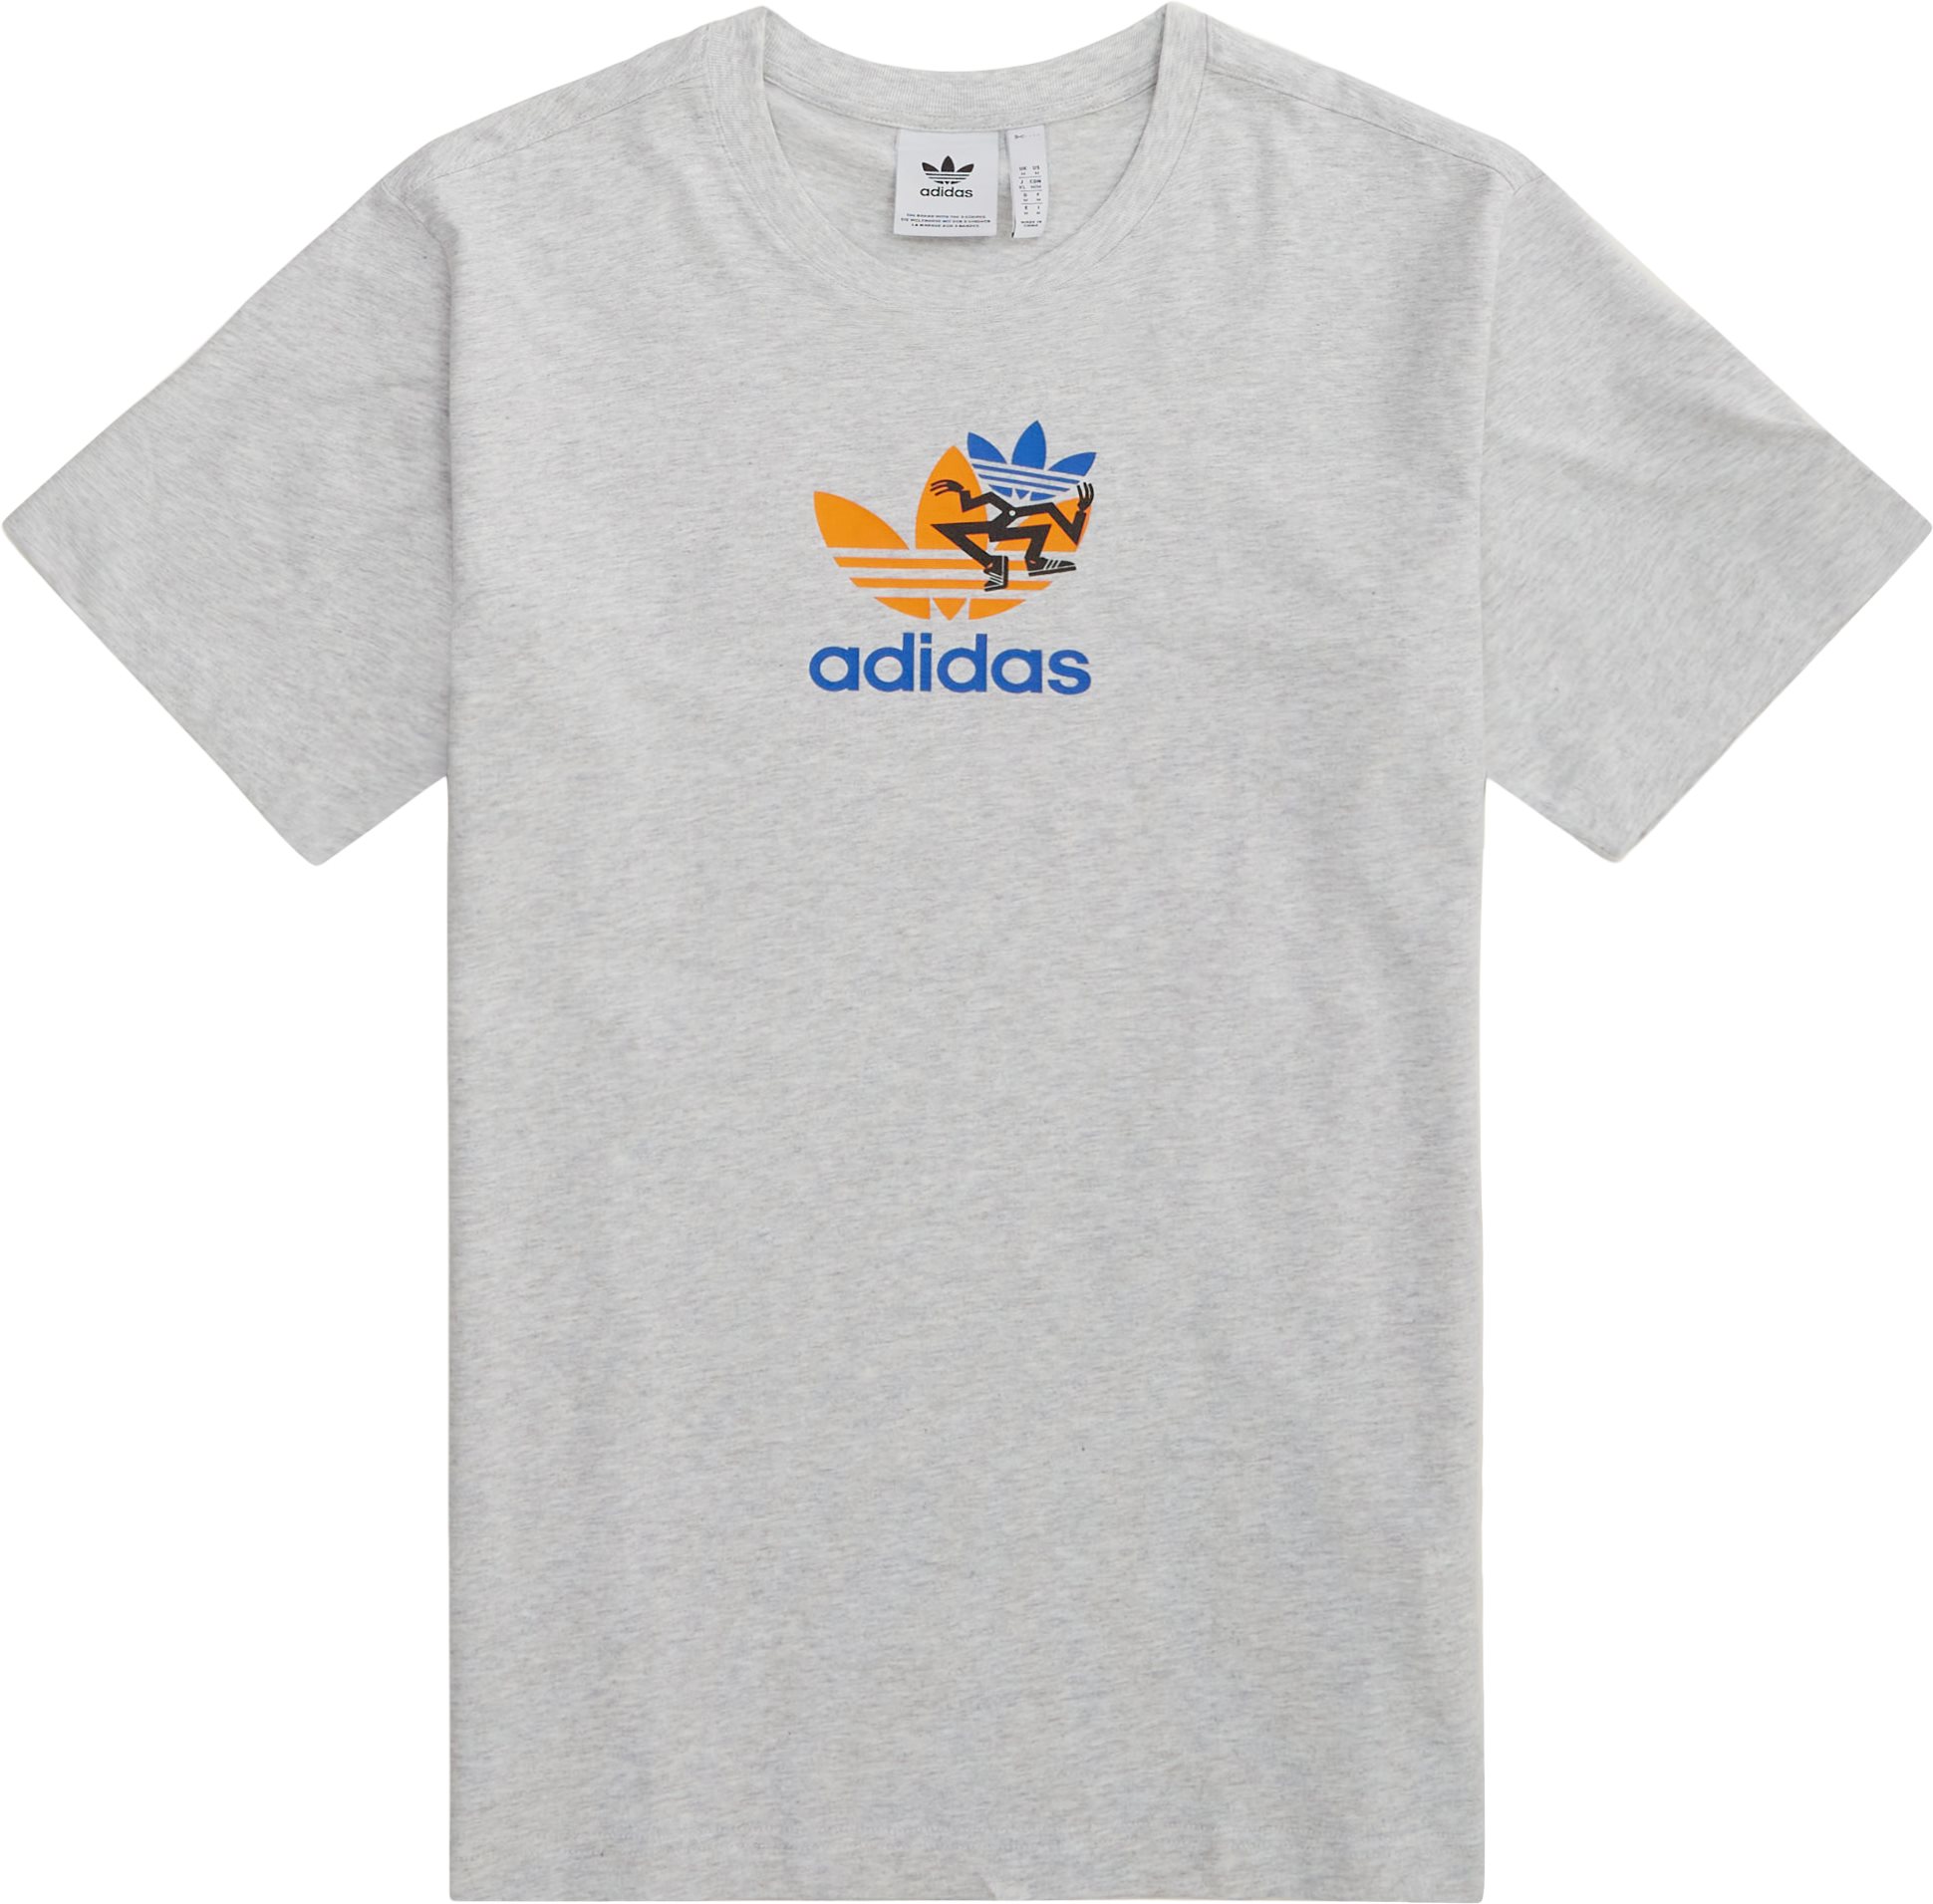 Adidas Originals T-shirts TS TEE IS2912 Grey